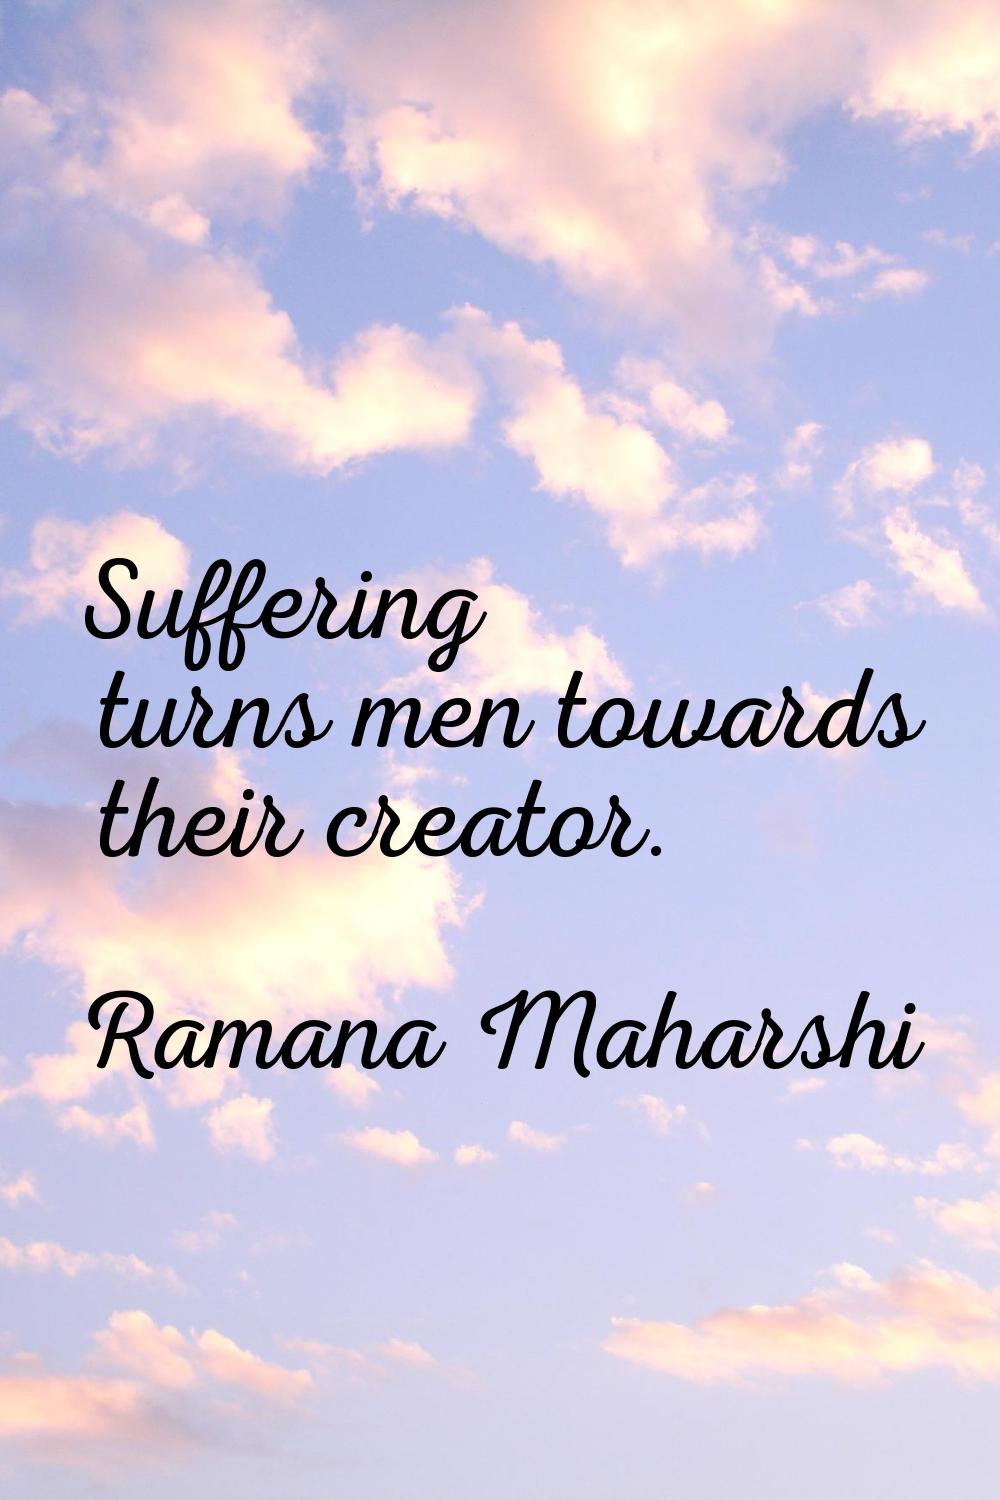 Suffering turns men towards their creator.